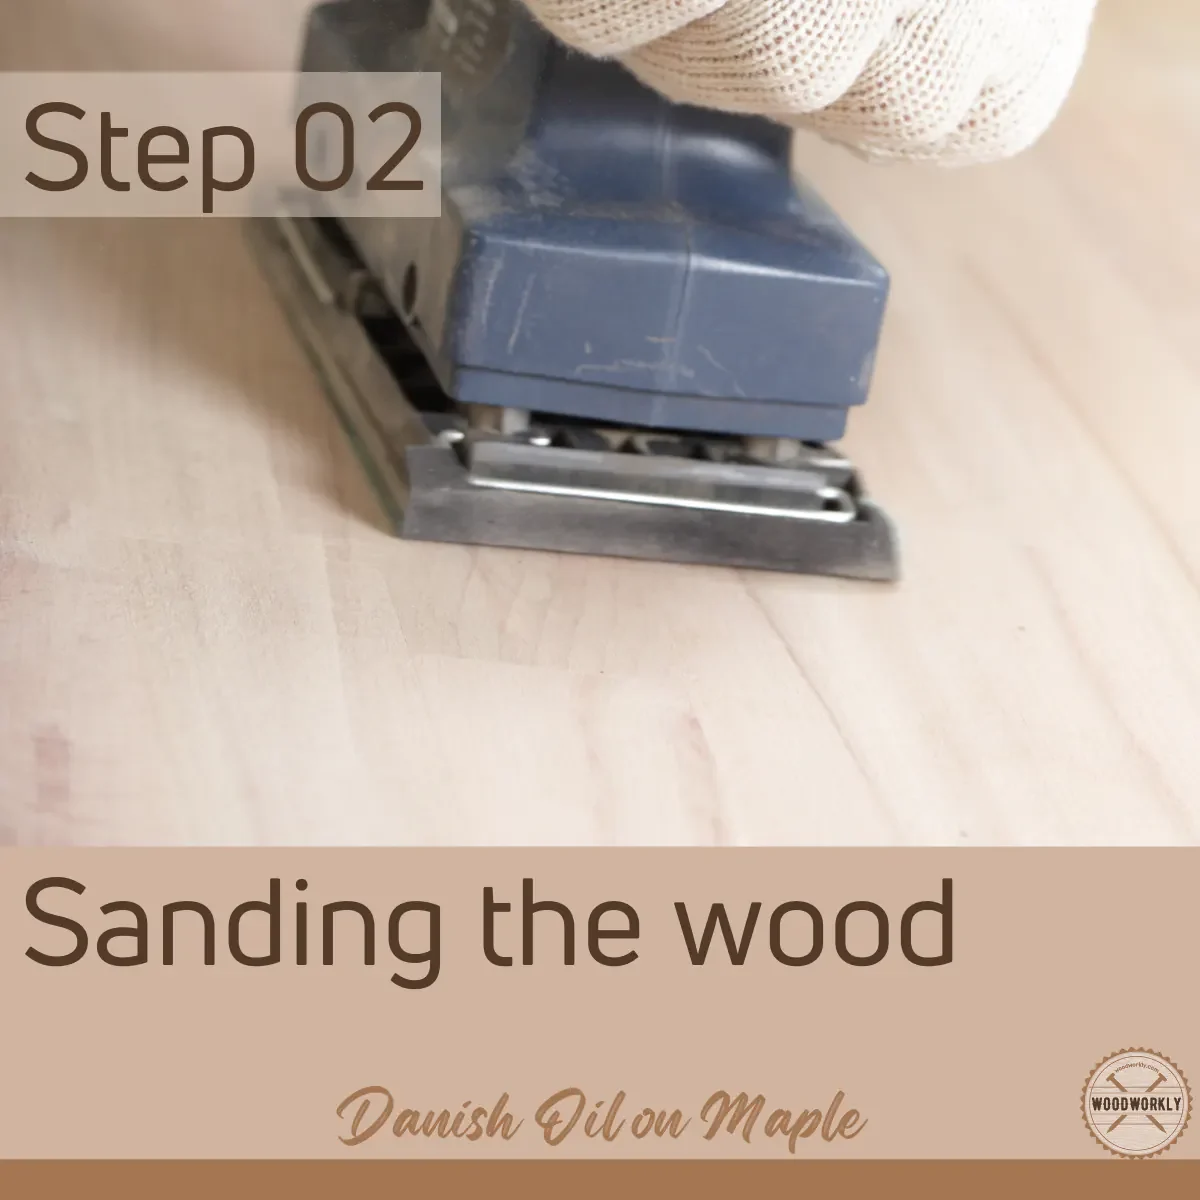 Sanding the maple wood surface before applying danish oil